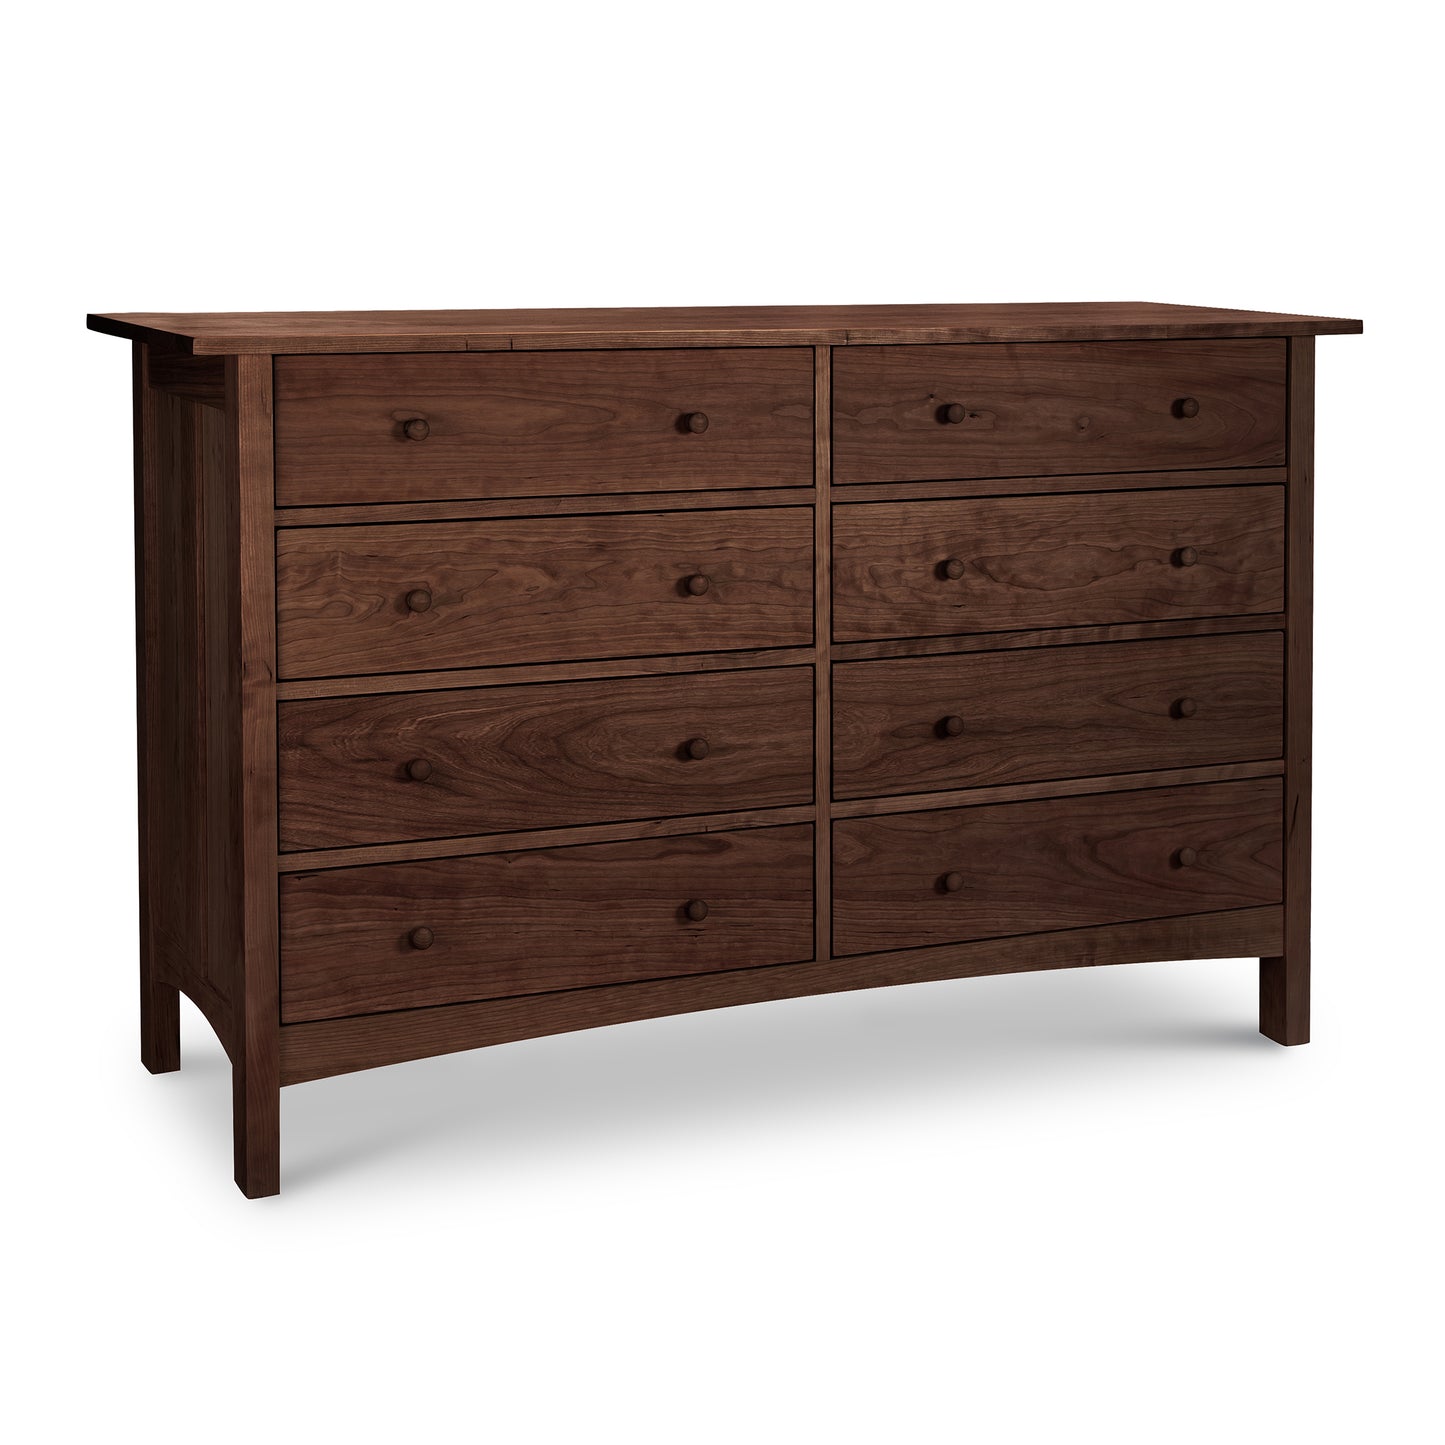 A Burlington Shaker 8-Drawer Dresser #1 made by Vermont Furniture Designs.